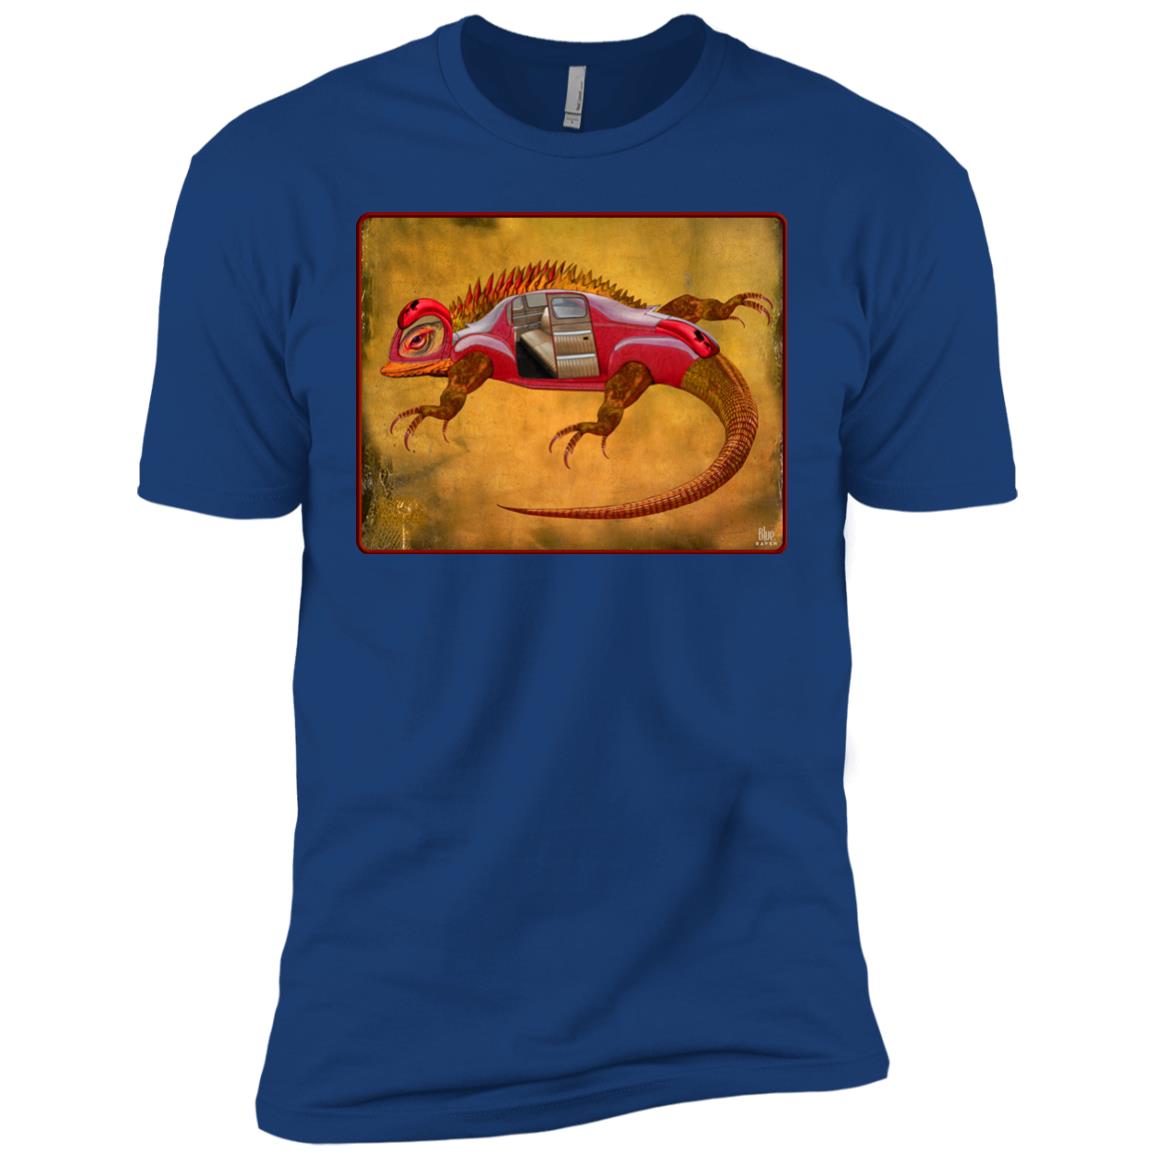 Uber Lizard - red - Boy's Premium T-Shirt